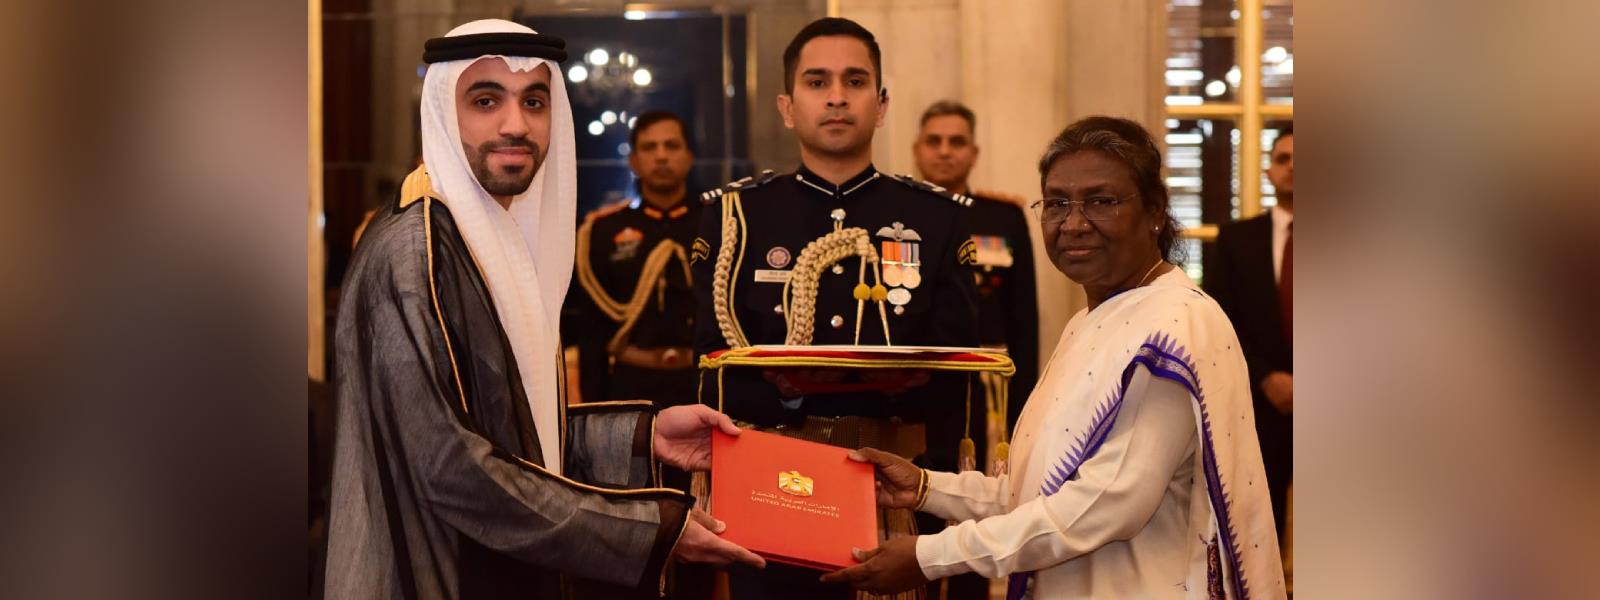 President Smt. Droupadi Murmu received credentials from H. E. Dr. Abdulnasser Jamal Hussain Mohammed Alshaali, Ambassador of the United Arab Emirstes at Rashtrapati Bhavan